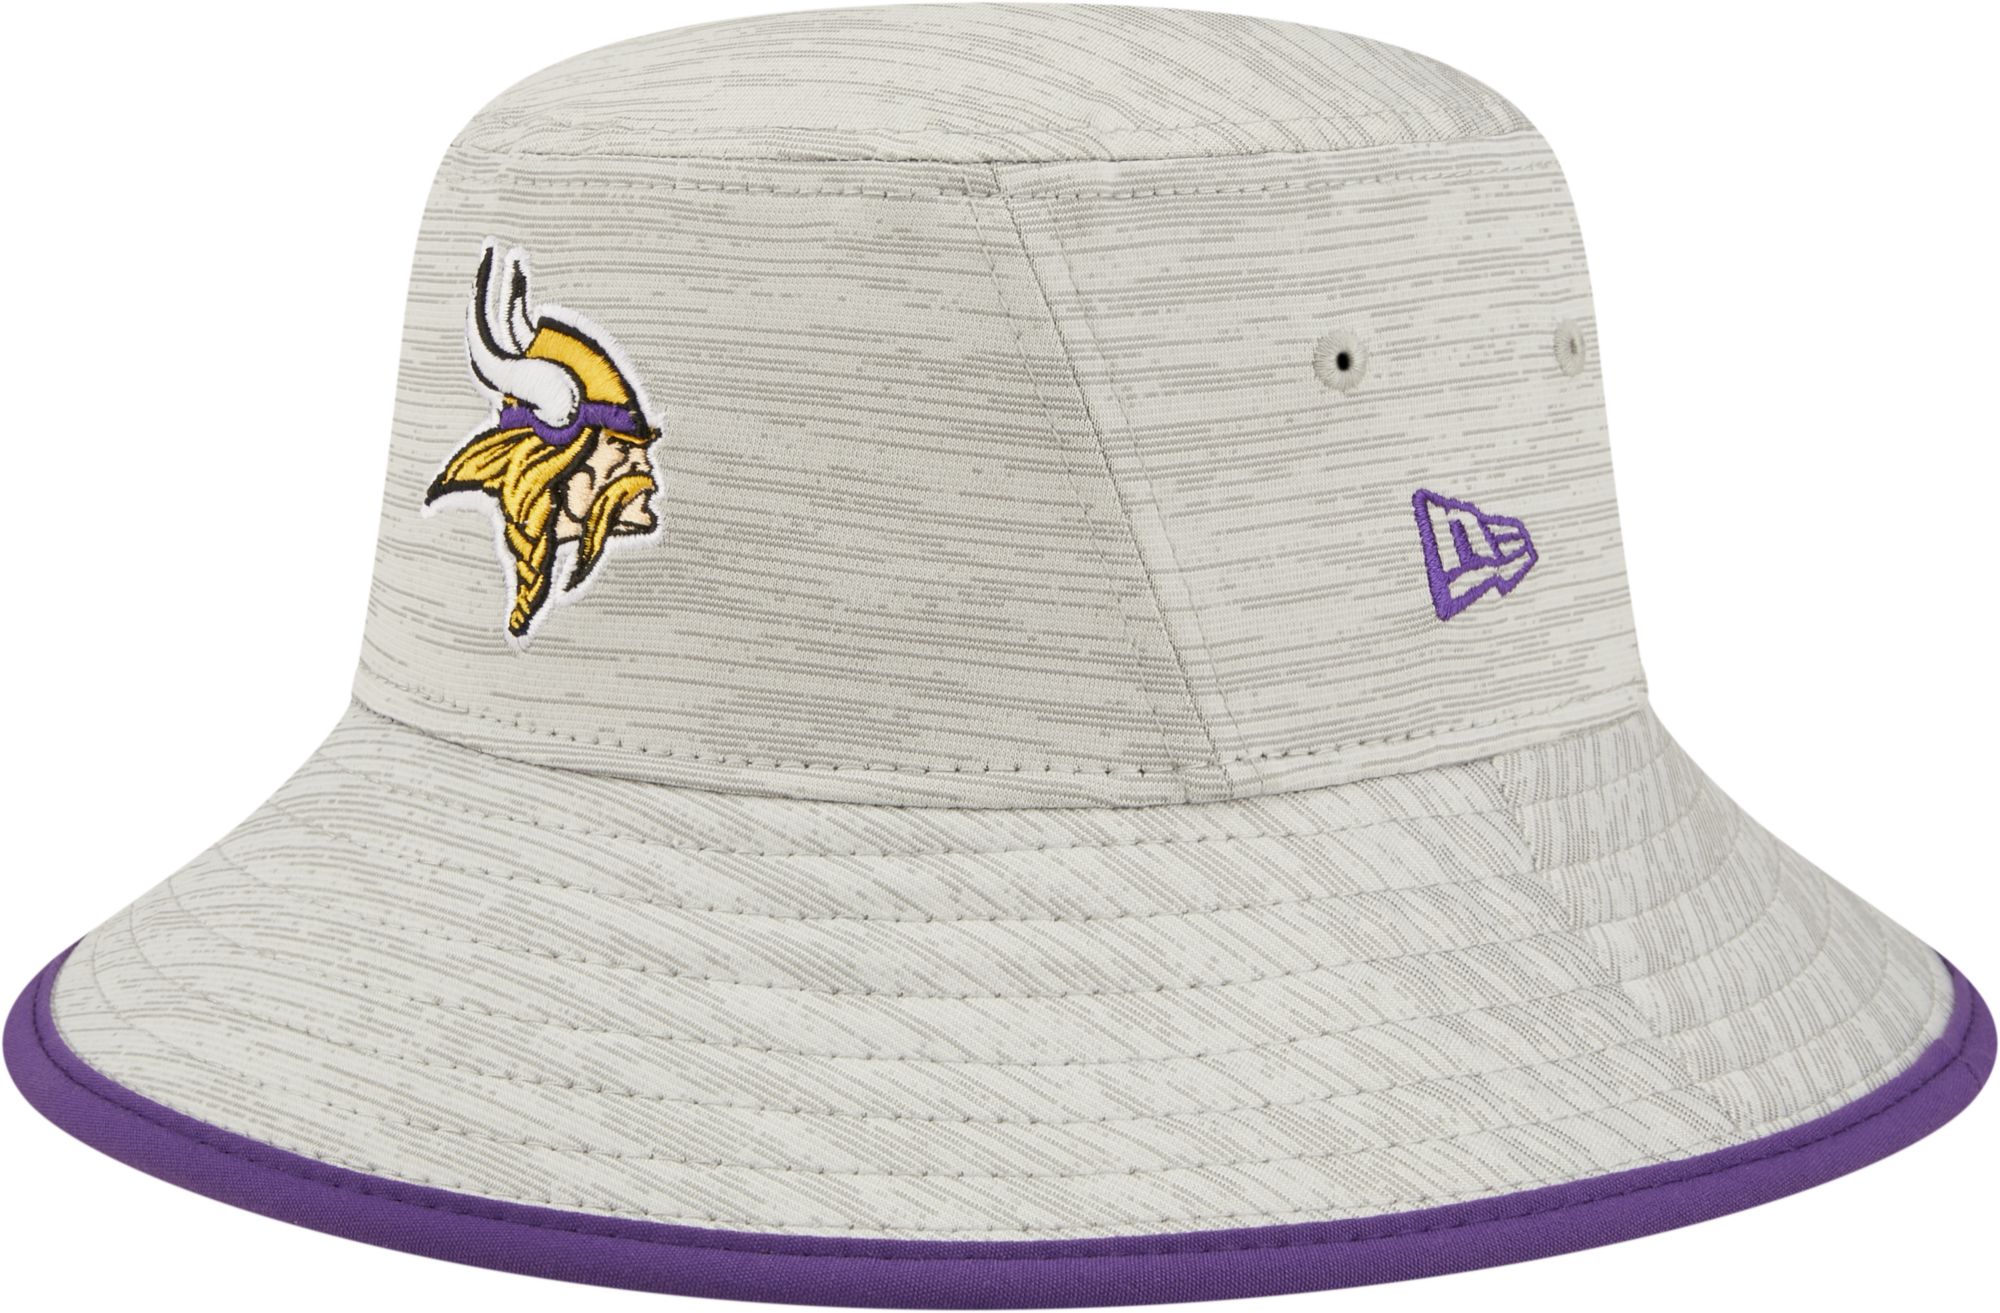 New Era / Men's Minnesota Vikings Distinct Grey Adjustable Bucket Hat